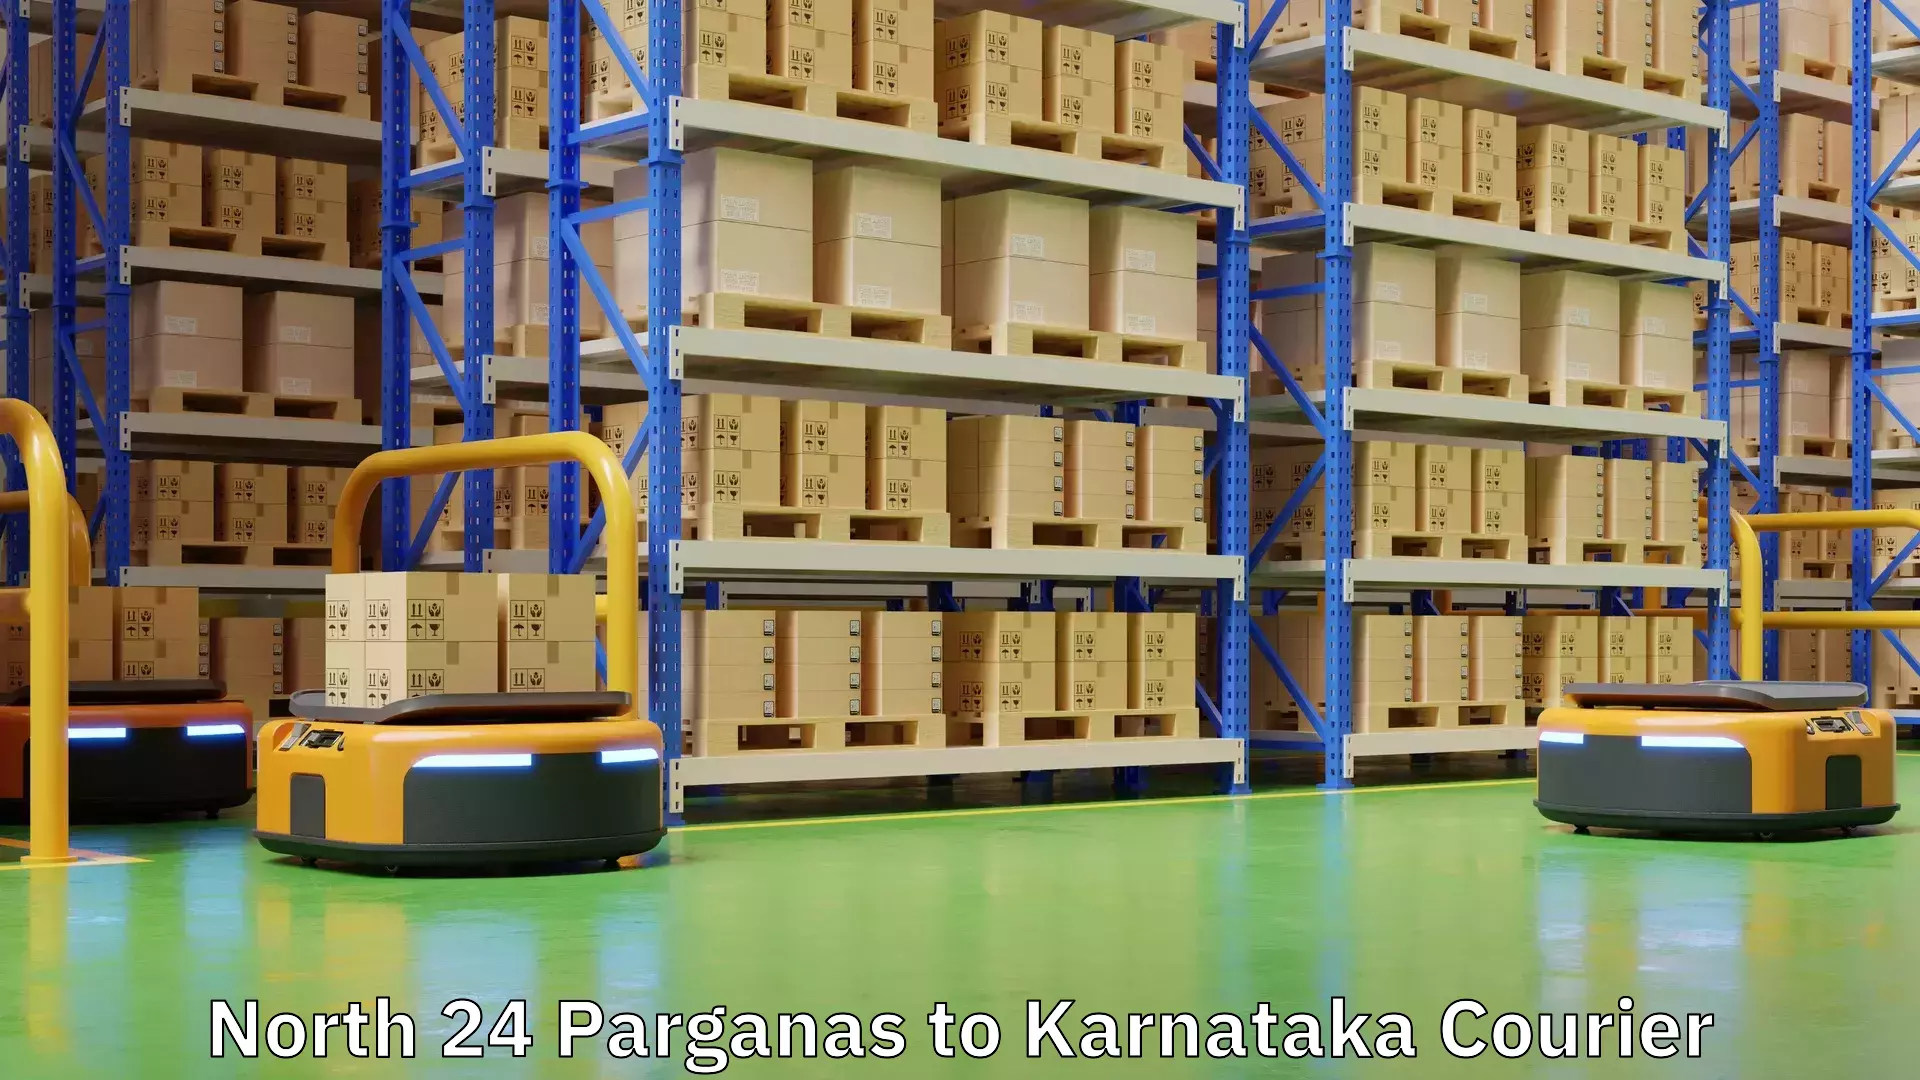 Modern delivery technologies in North 24 Parganas to Karnataka